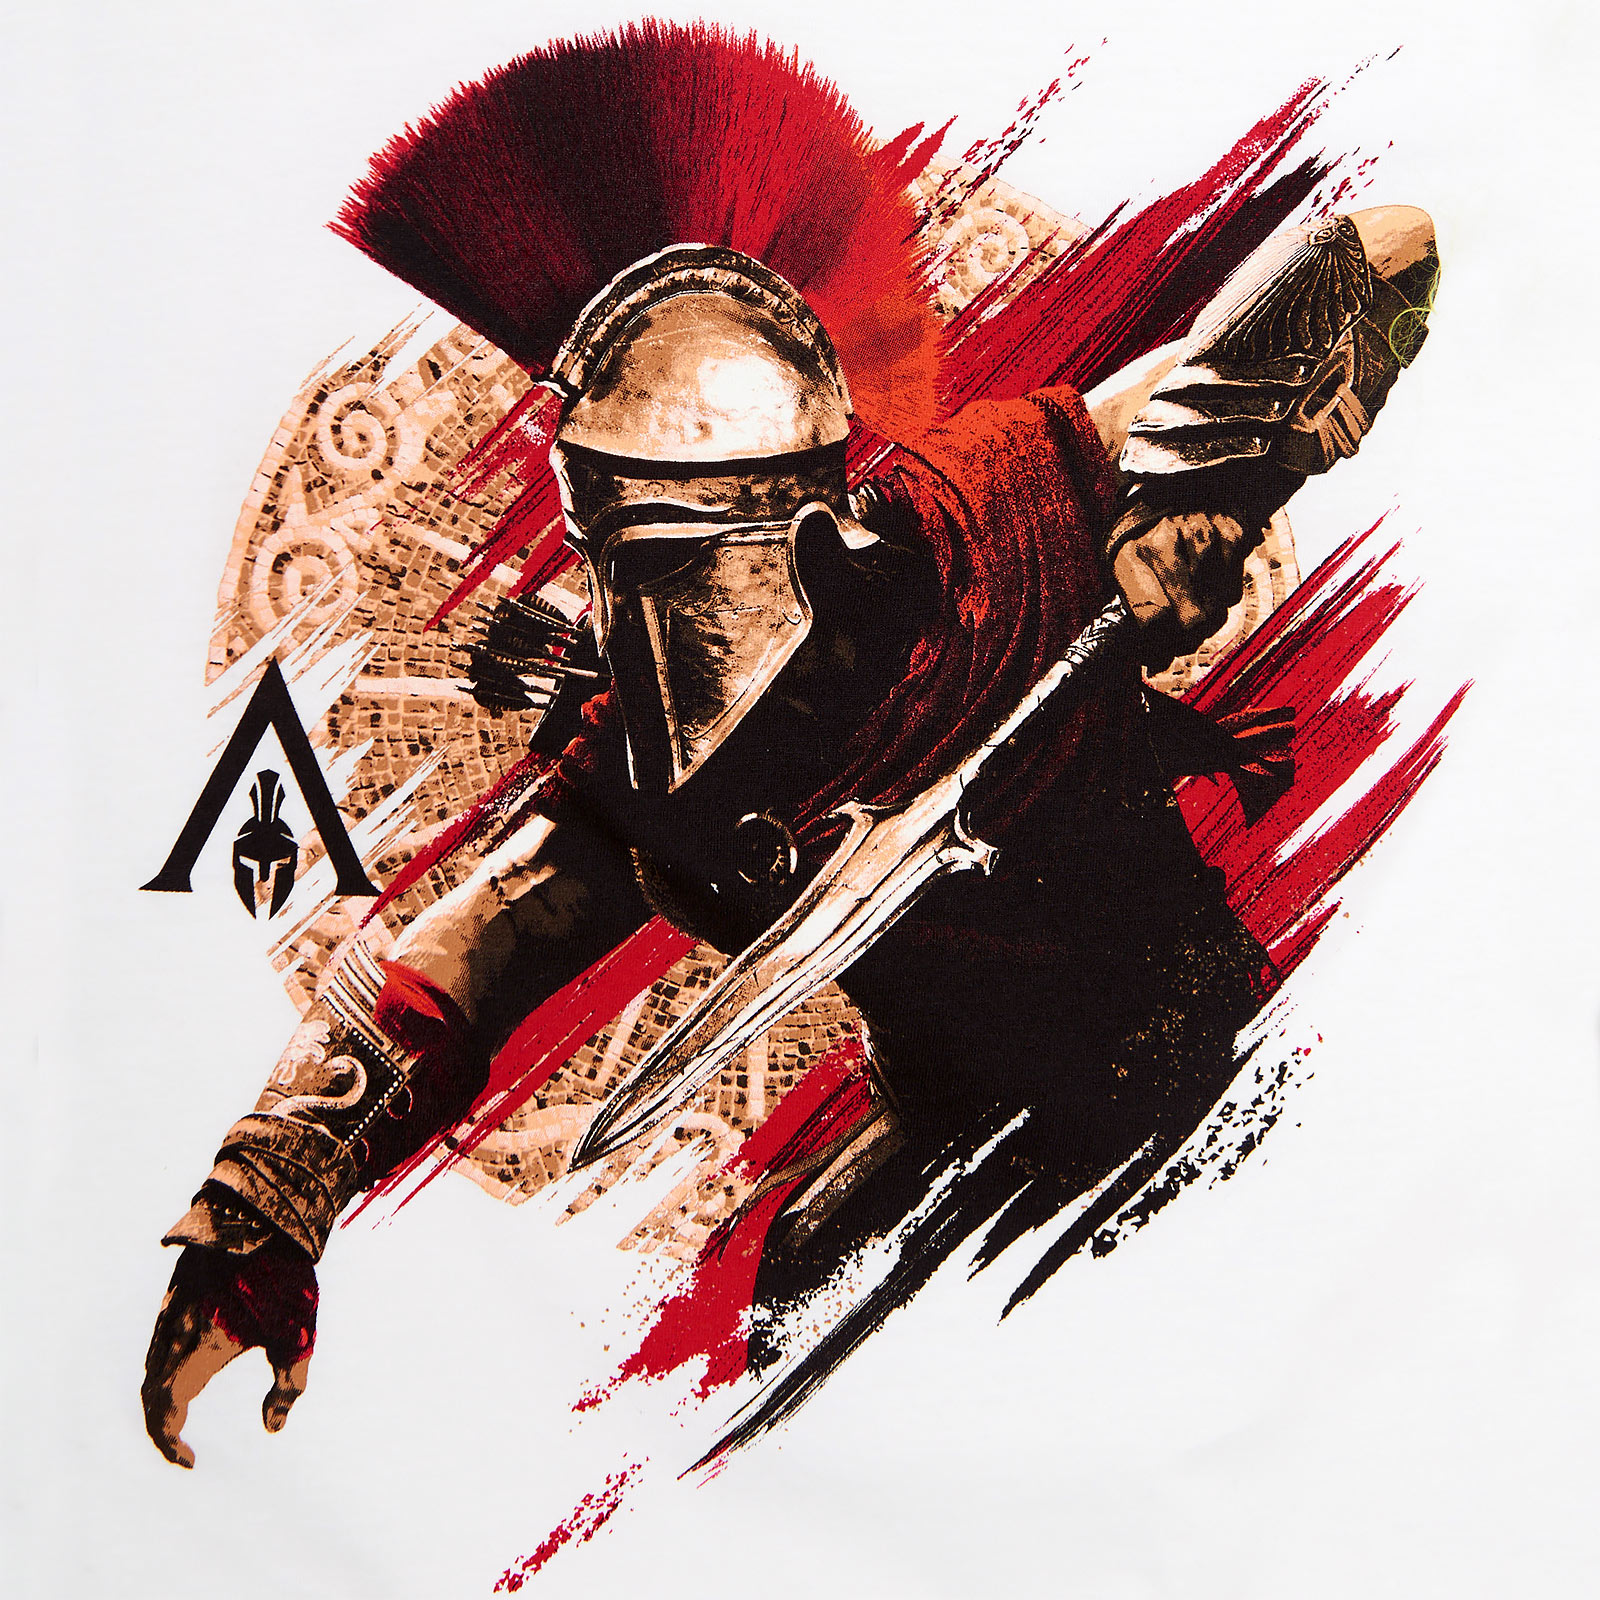 Assassins Creed - T-shirt Alexios Armour blanc